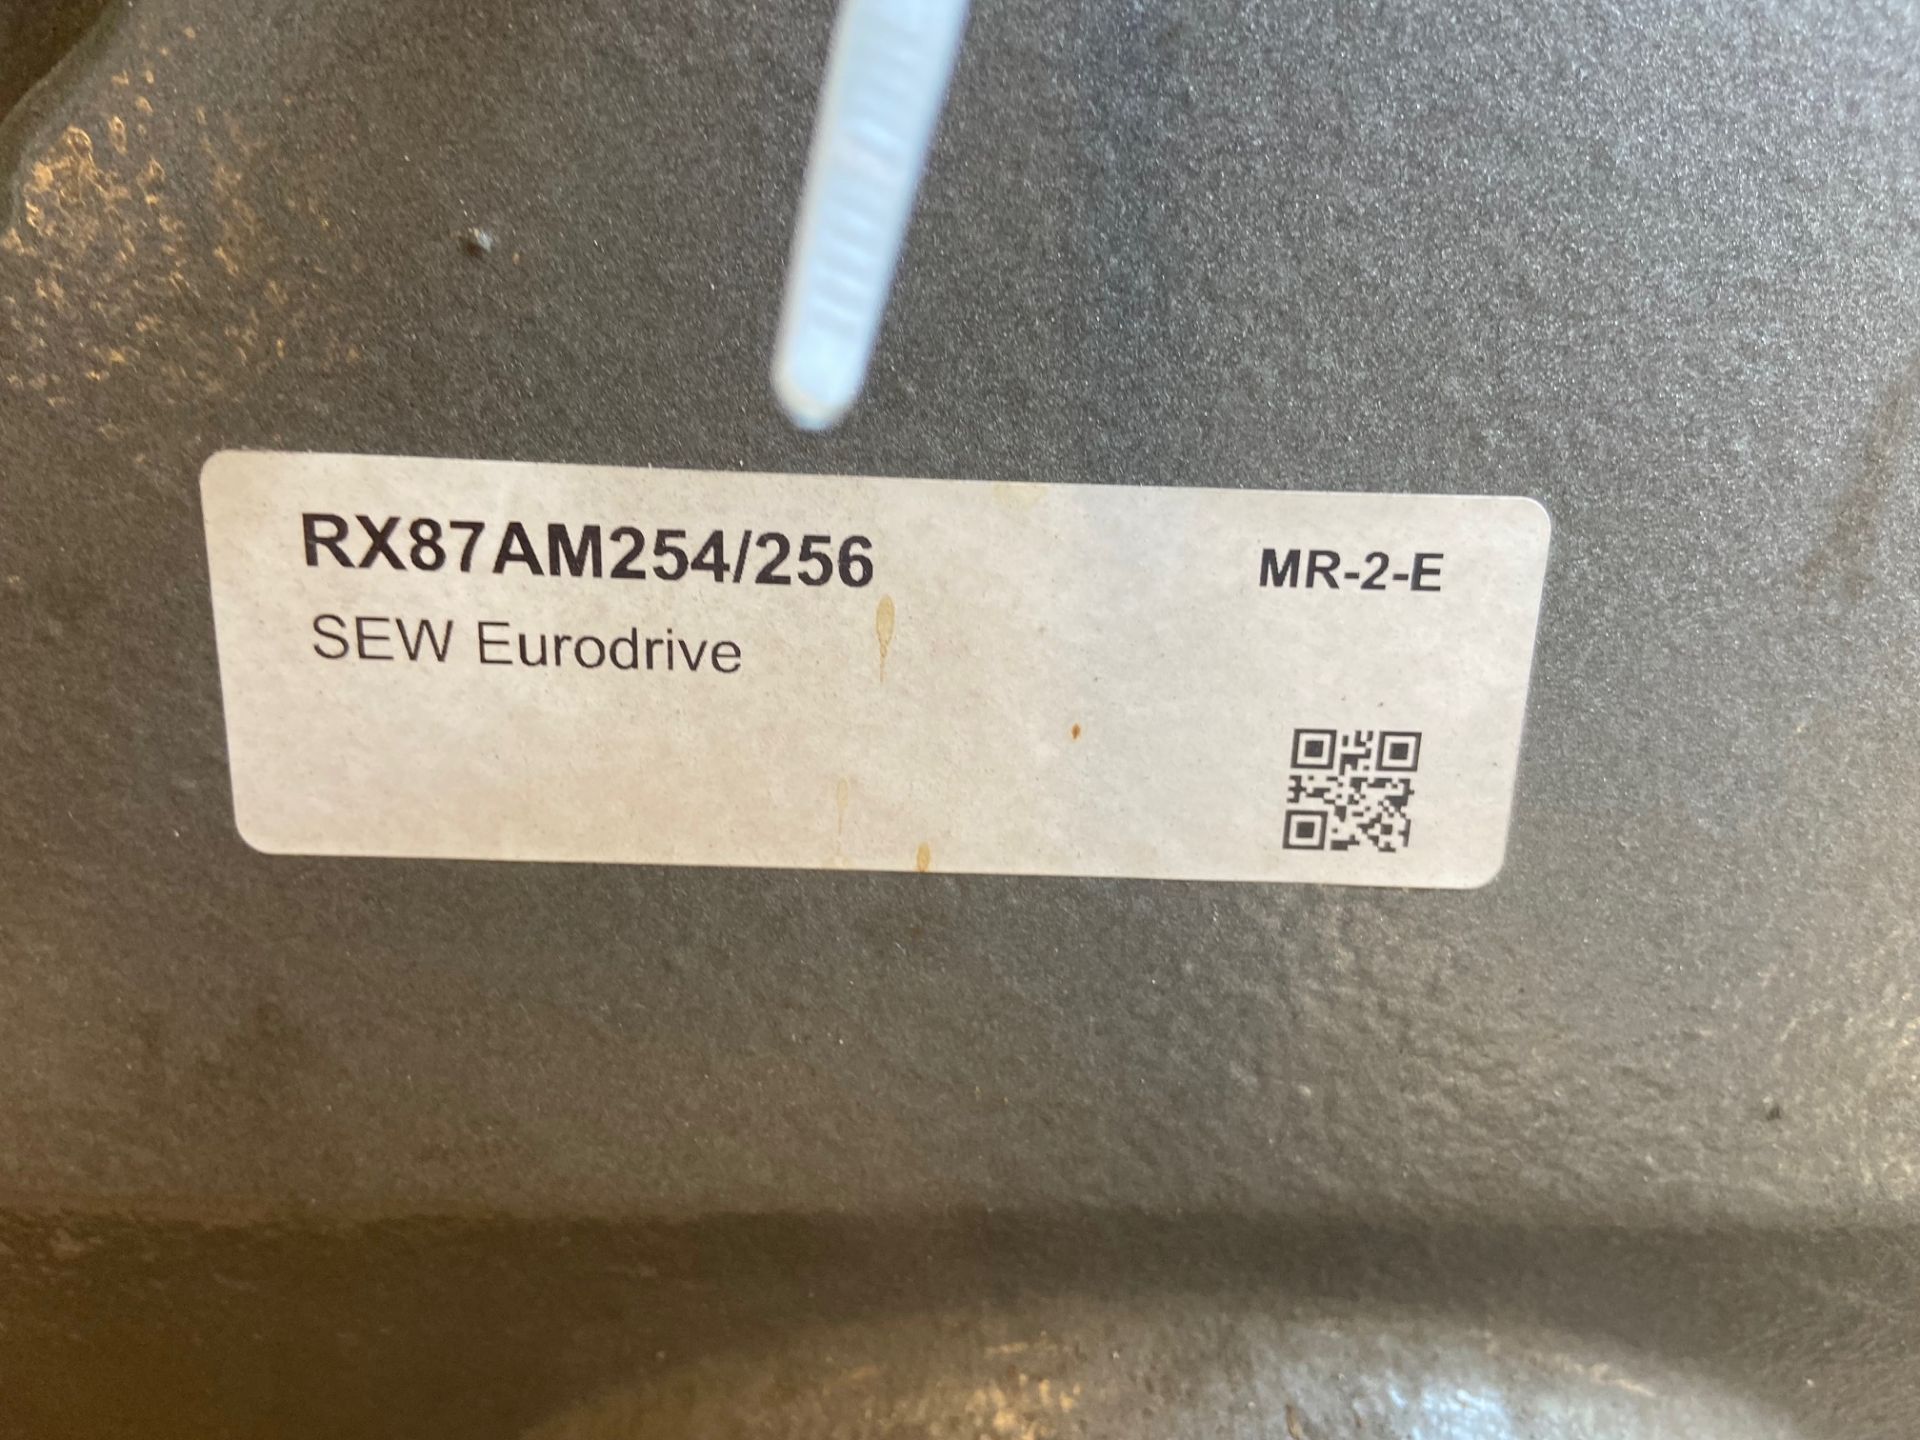 NEW SEW EURODRIVE GEAR DRIVE FOR AXIFLOW ST   90 PUMP, TYPE RX 87AM254/256, INPUT 1750, OUTPUT - Bild 5 aus 6